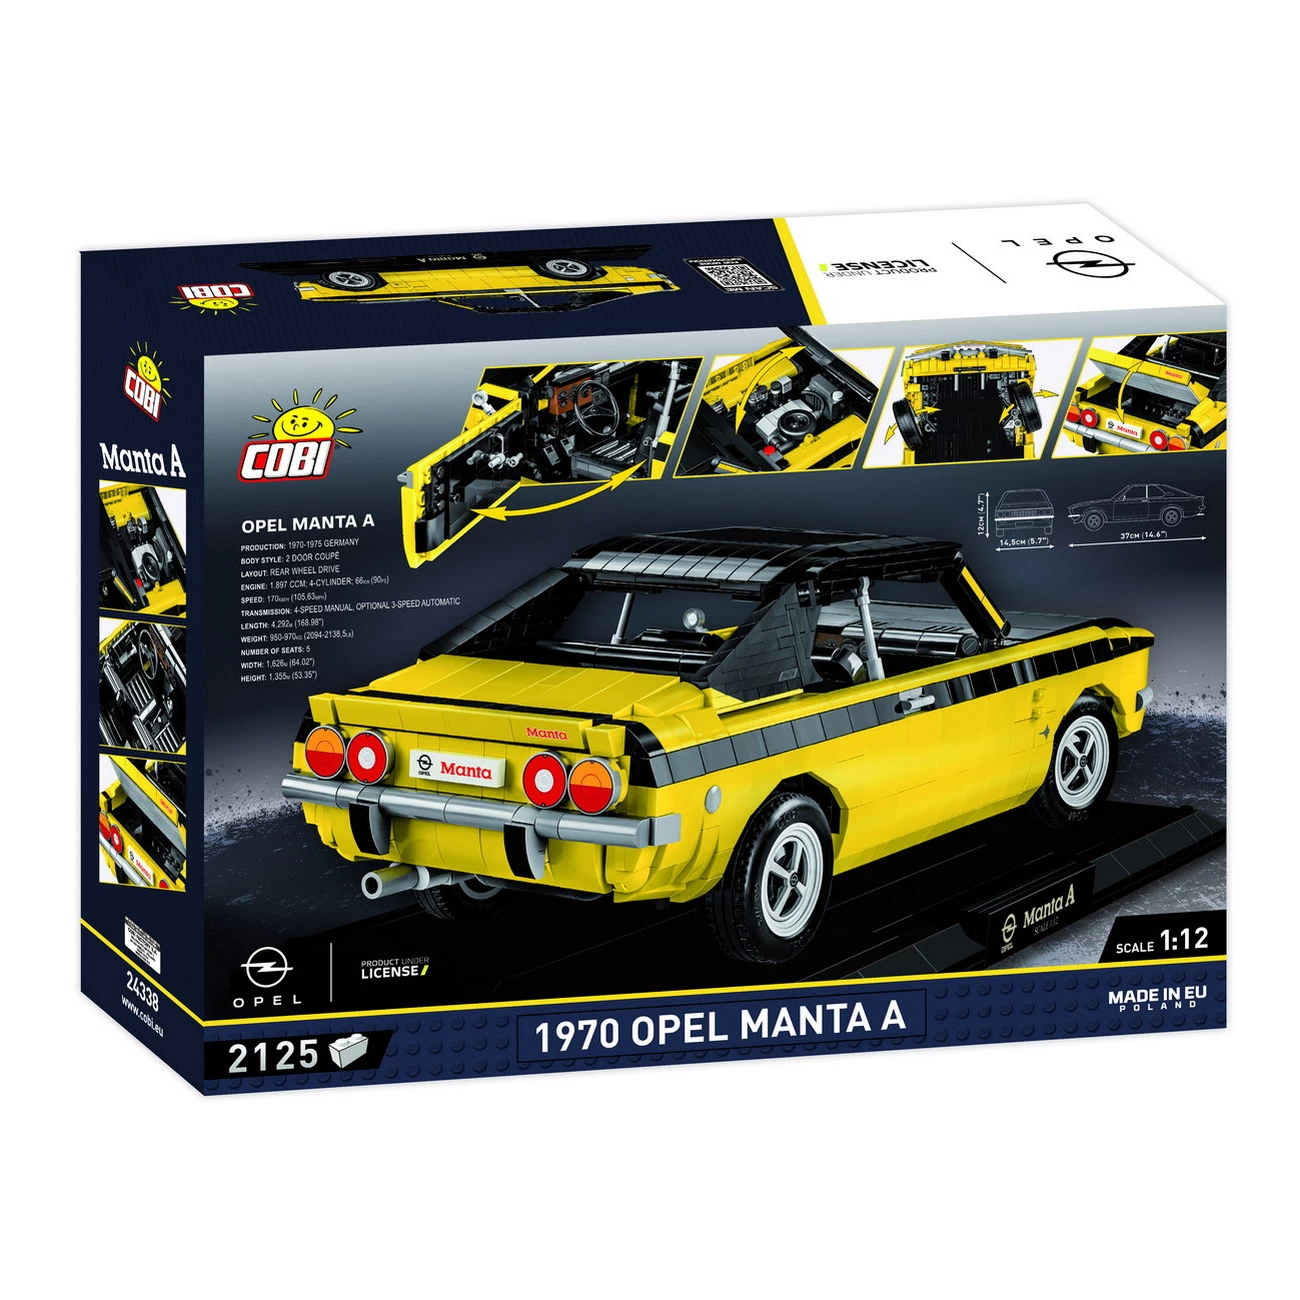 COBI - 1970 Opel Manta A (24338) - Executive Edition